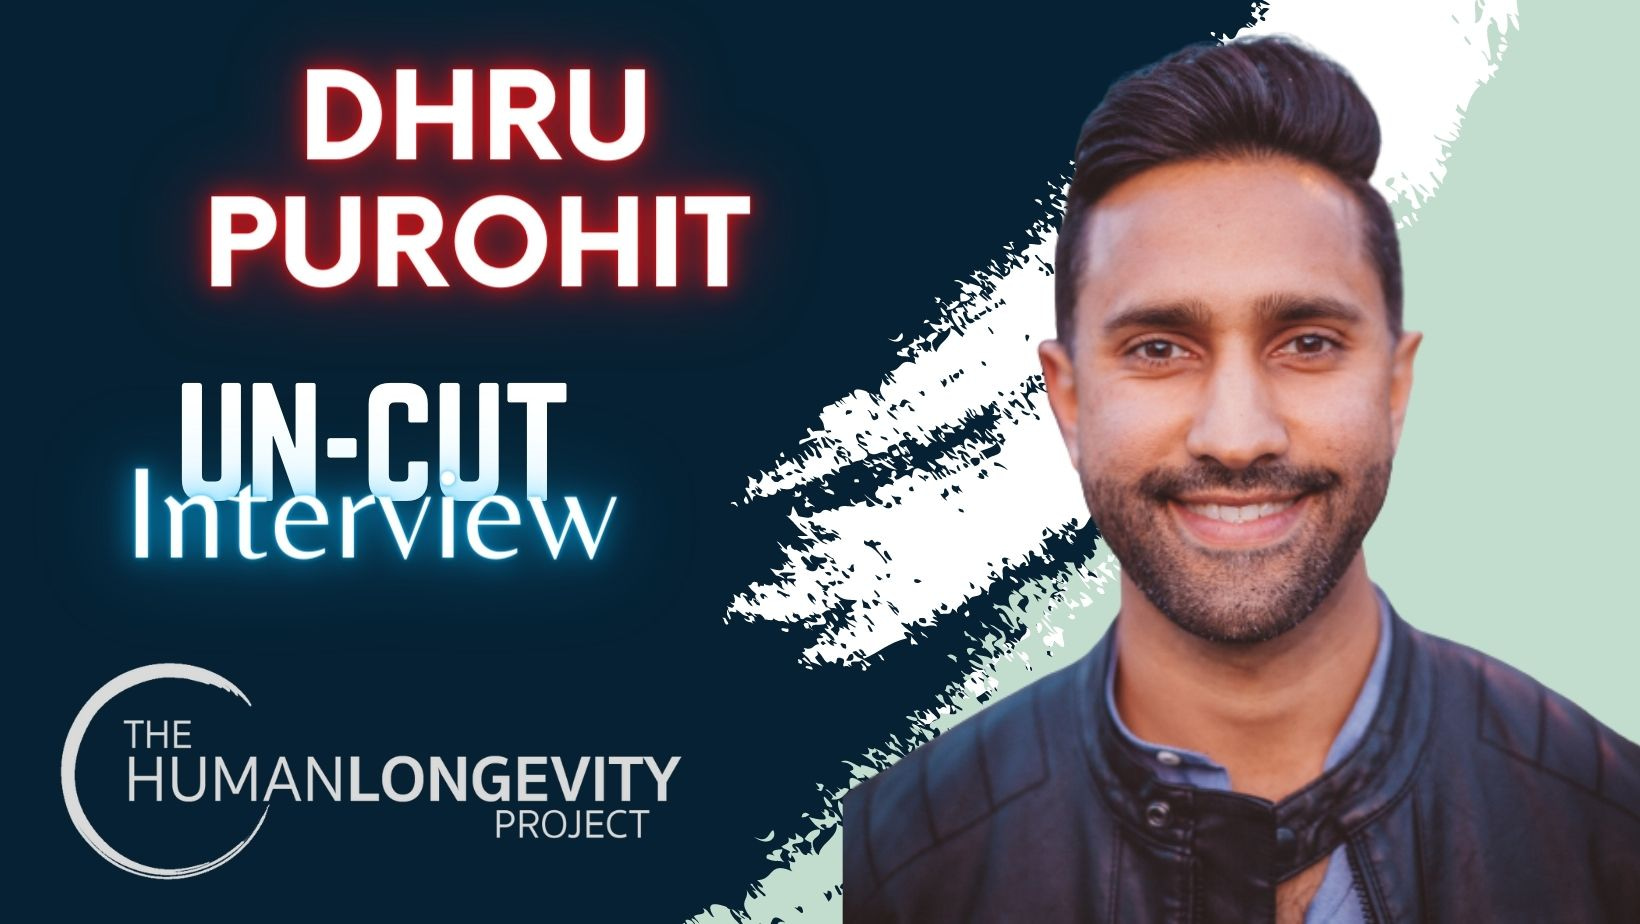 Human Longevity Project Uncut Interview With Dhru Purohit